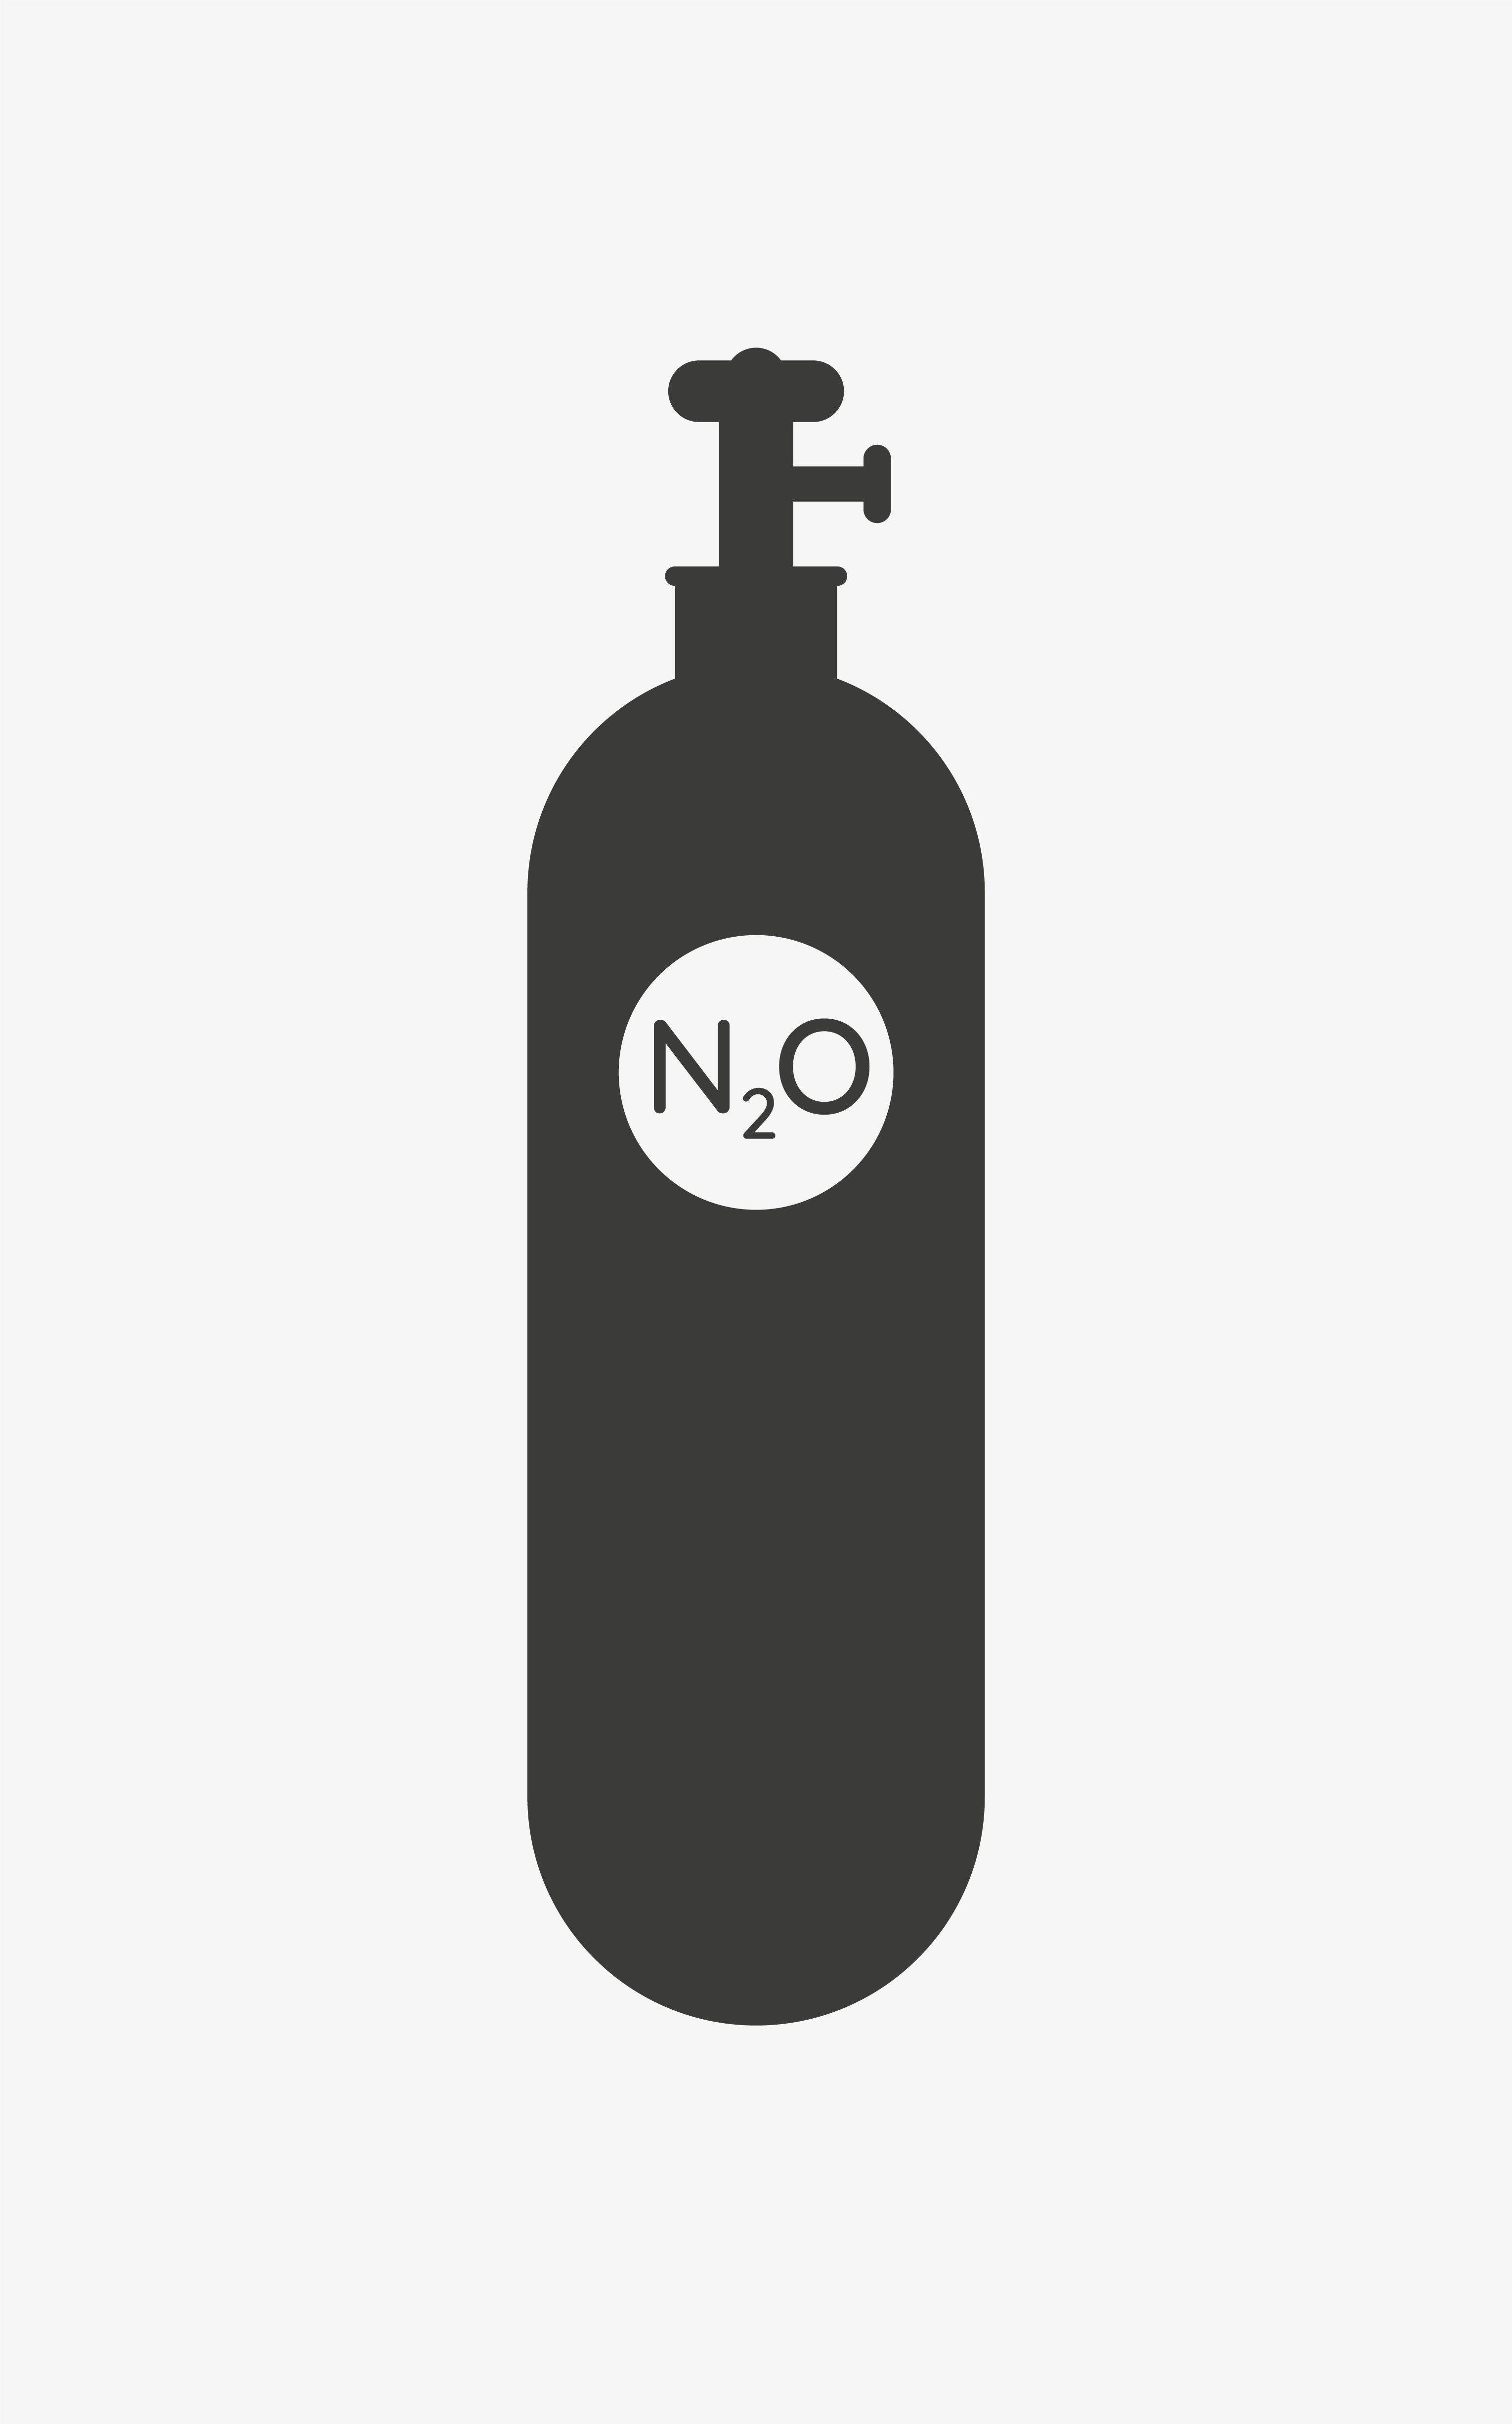 Nitrous oxide cylinder vector icon isolated on white background. | Image Credit: © Adam - stock.adobe.com